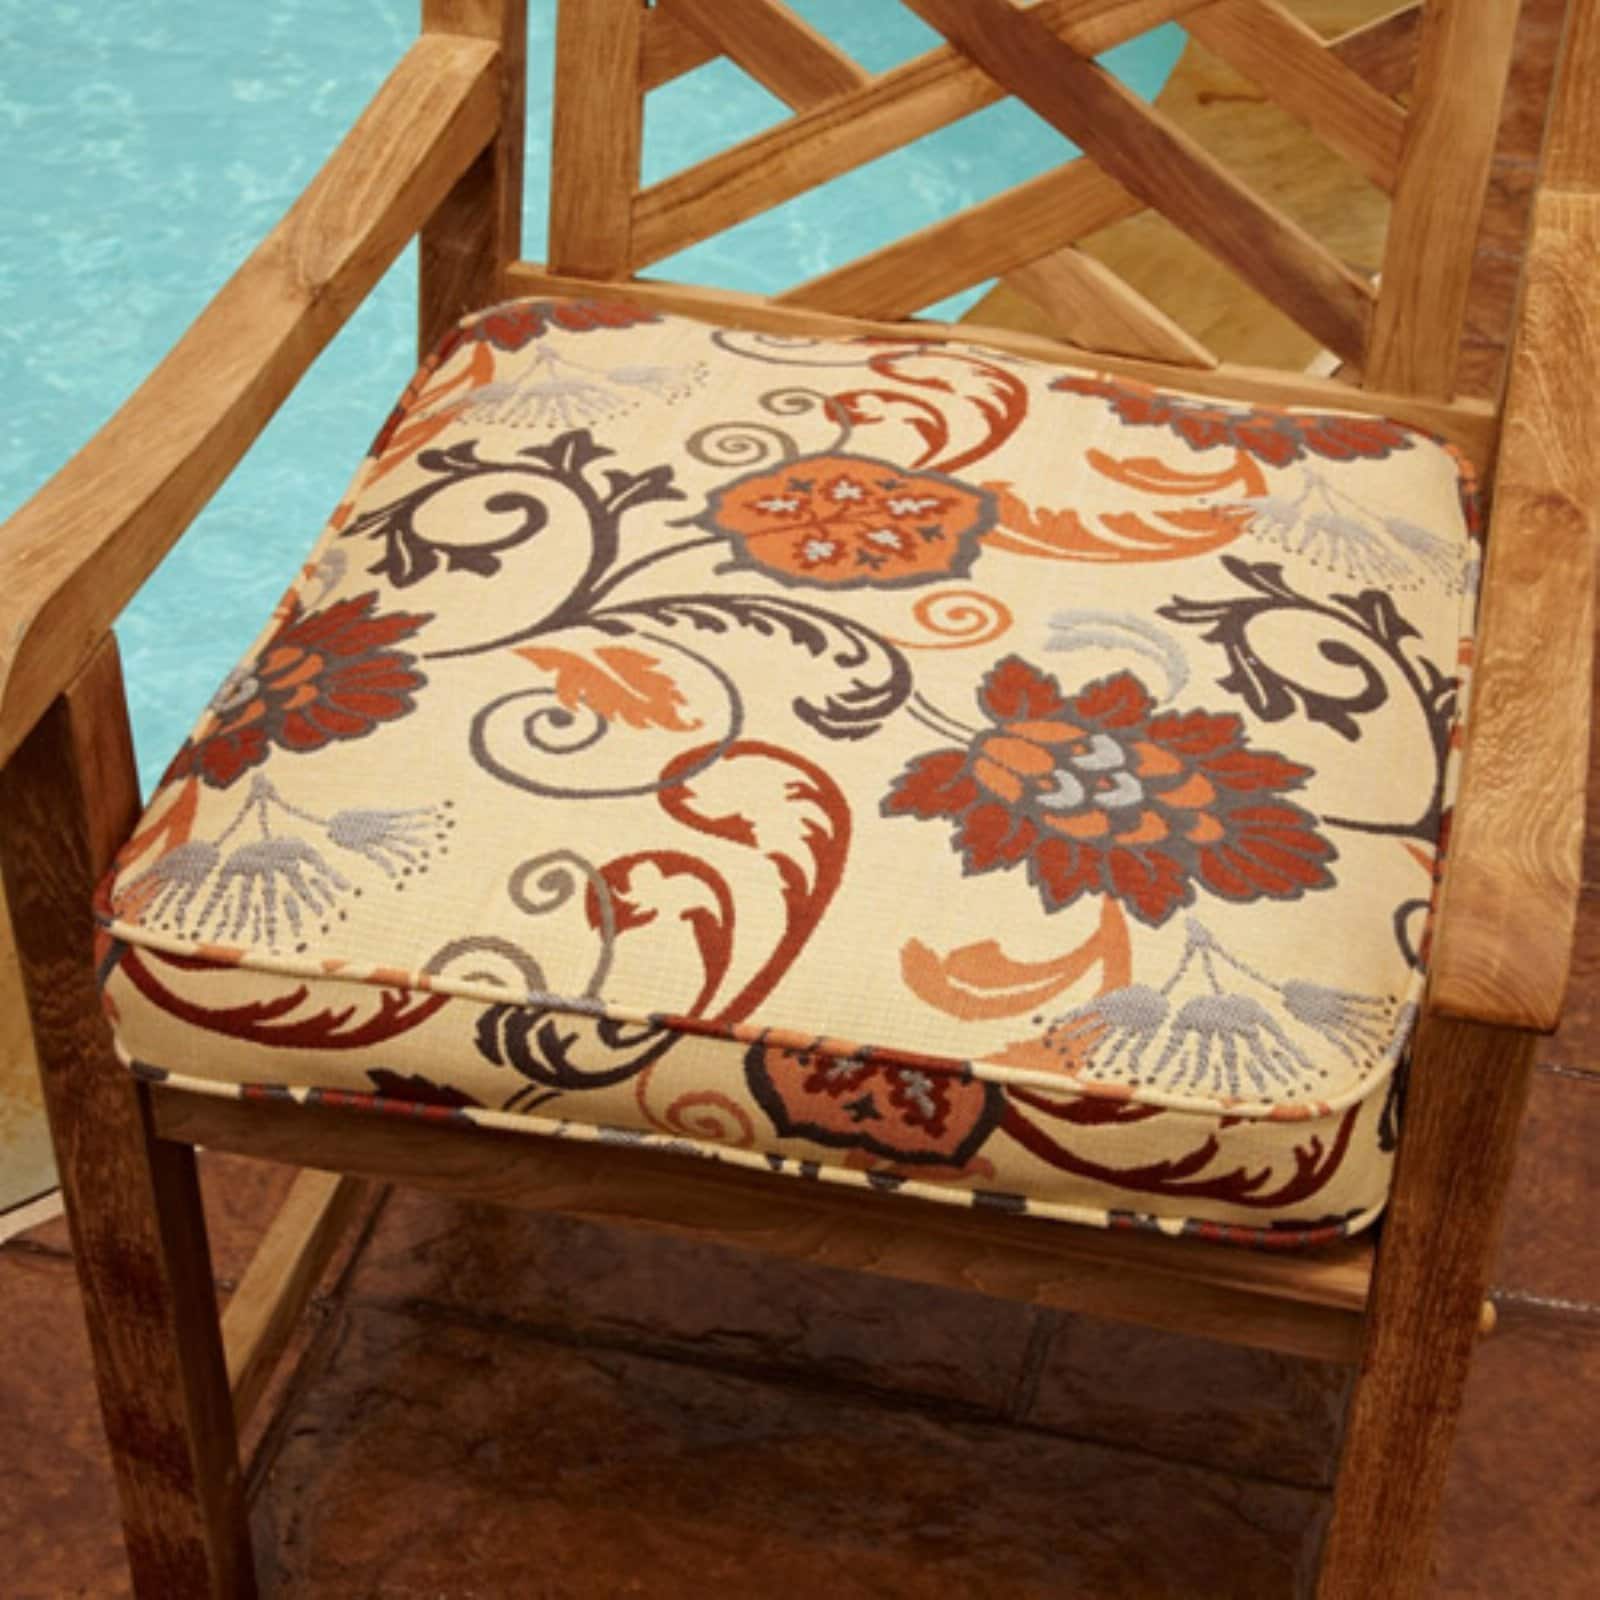 Mozaic Company Sunbrella Corded Indoor/Outdoor Chair Cushion - image 2 of 3